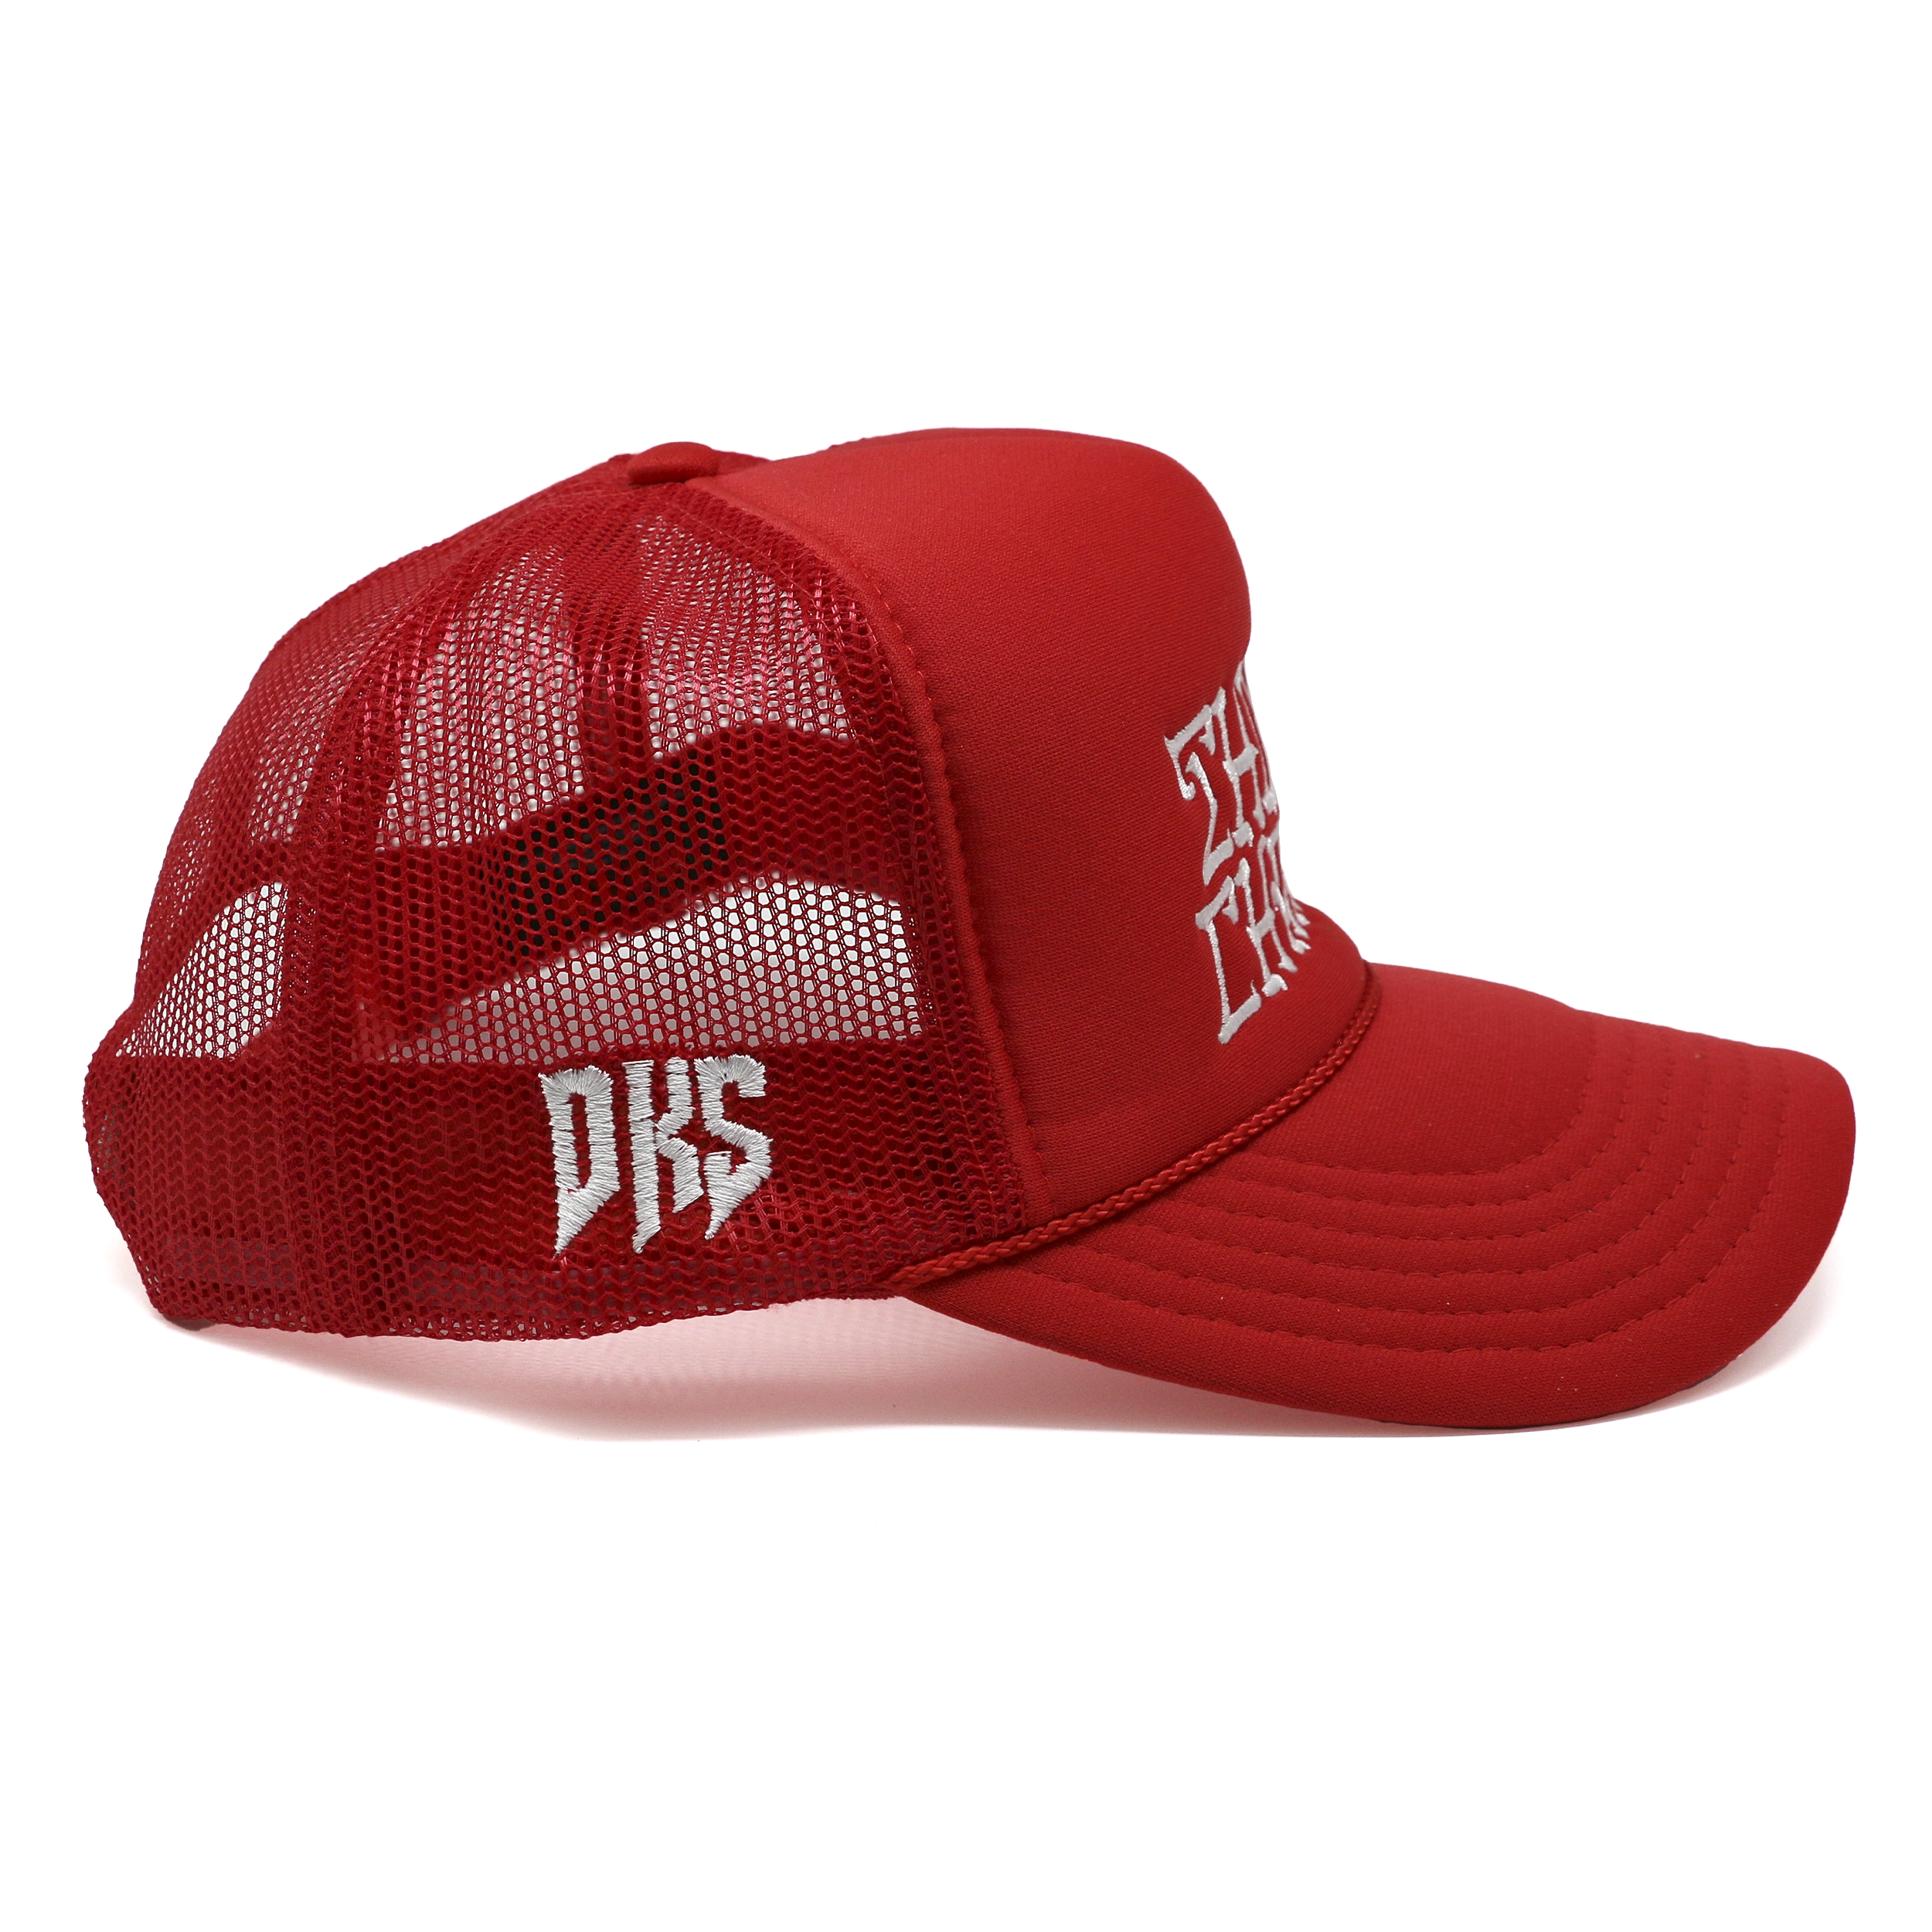 DKS "Things Change" Trucker Hat (Red/White)